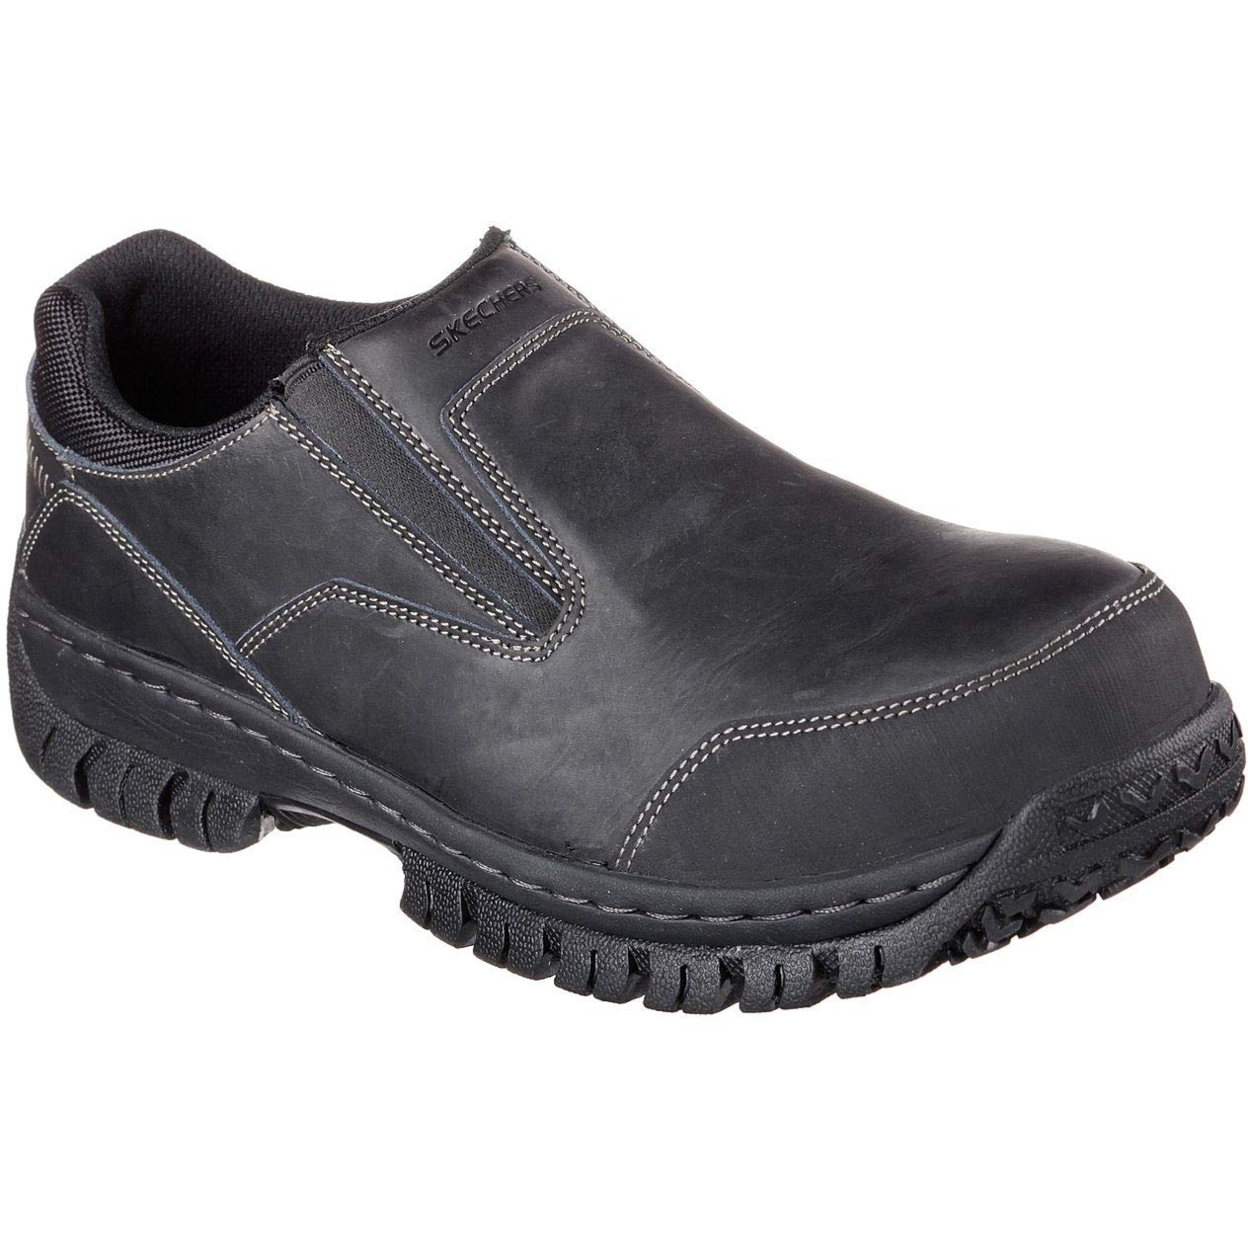 Skechers For Work Men's Hartan Steel Toe Slip-On Shoe Varies BLACK - BLACK, 13